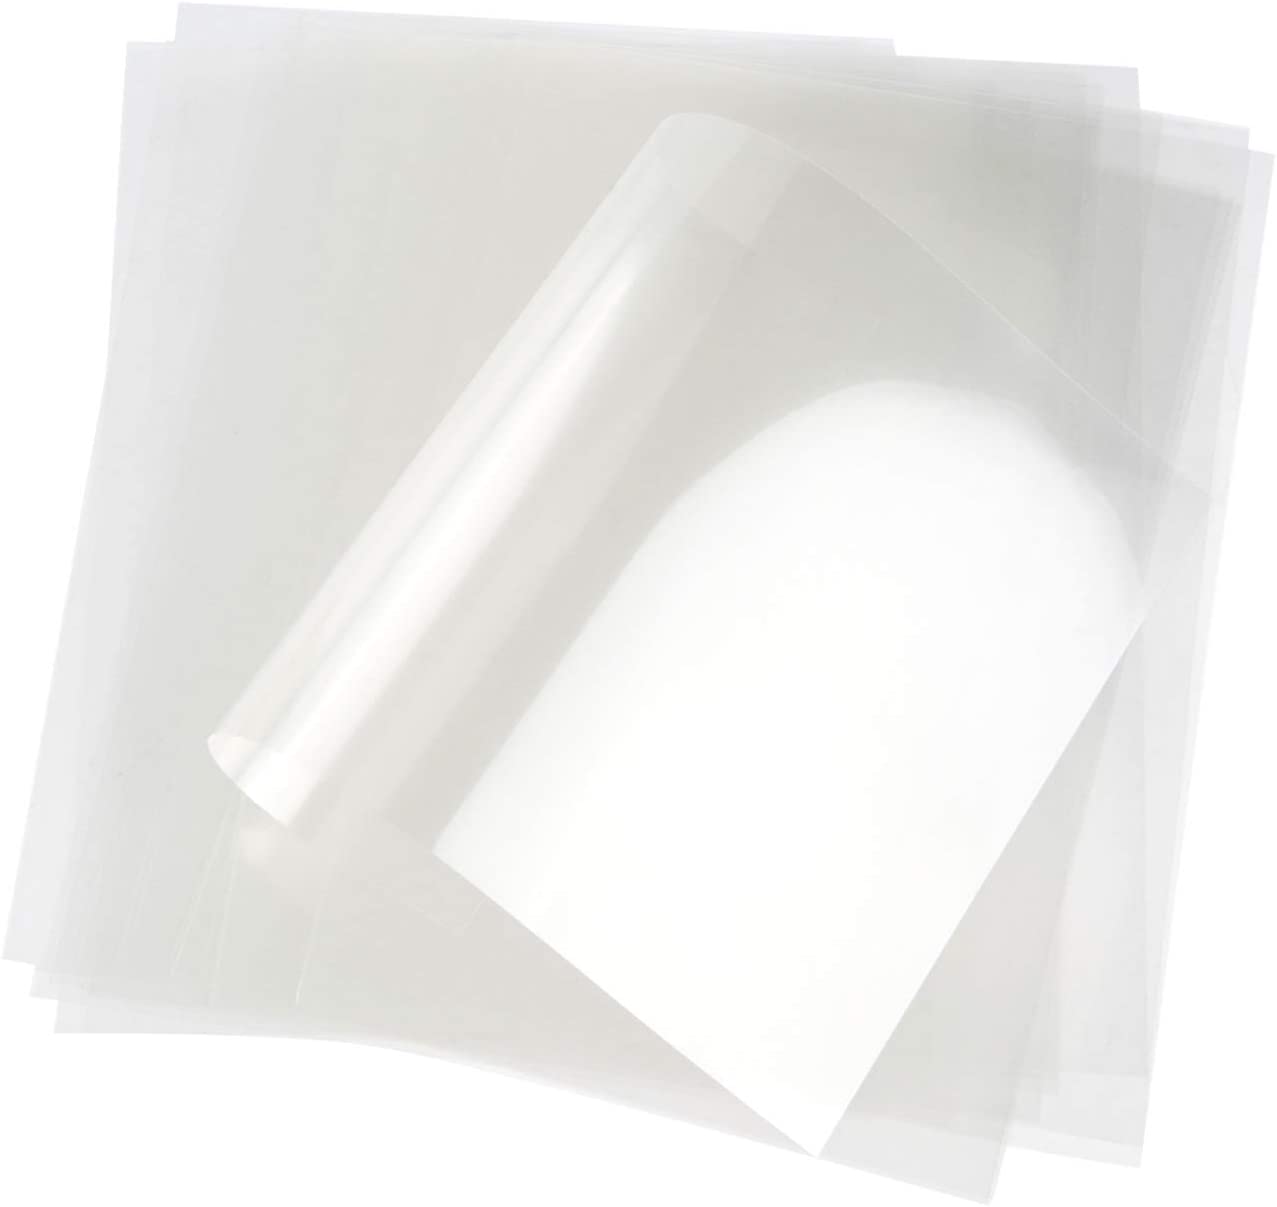  10 hojas de acetato transparente resistentes al calor para  ventanas de tarjetas Shaker de 8.5 x 11 pulgadas, hojas de acetato  transparente nítido en relieve térmico para hacer tarjetas, manualidades,  suministros